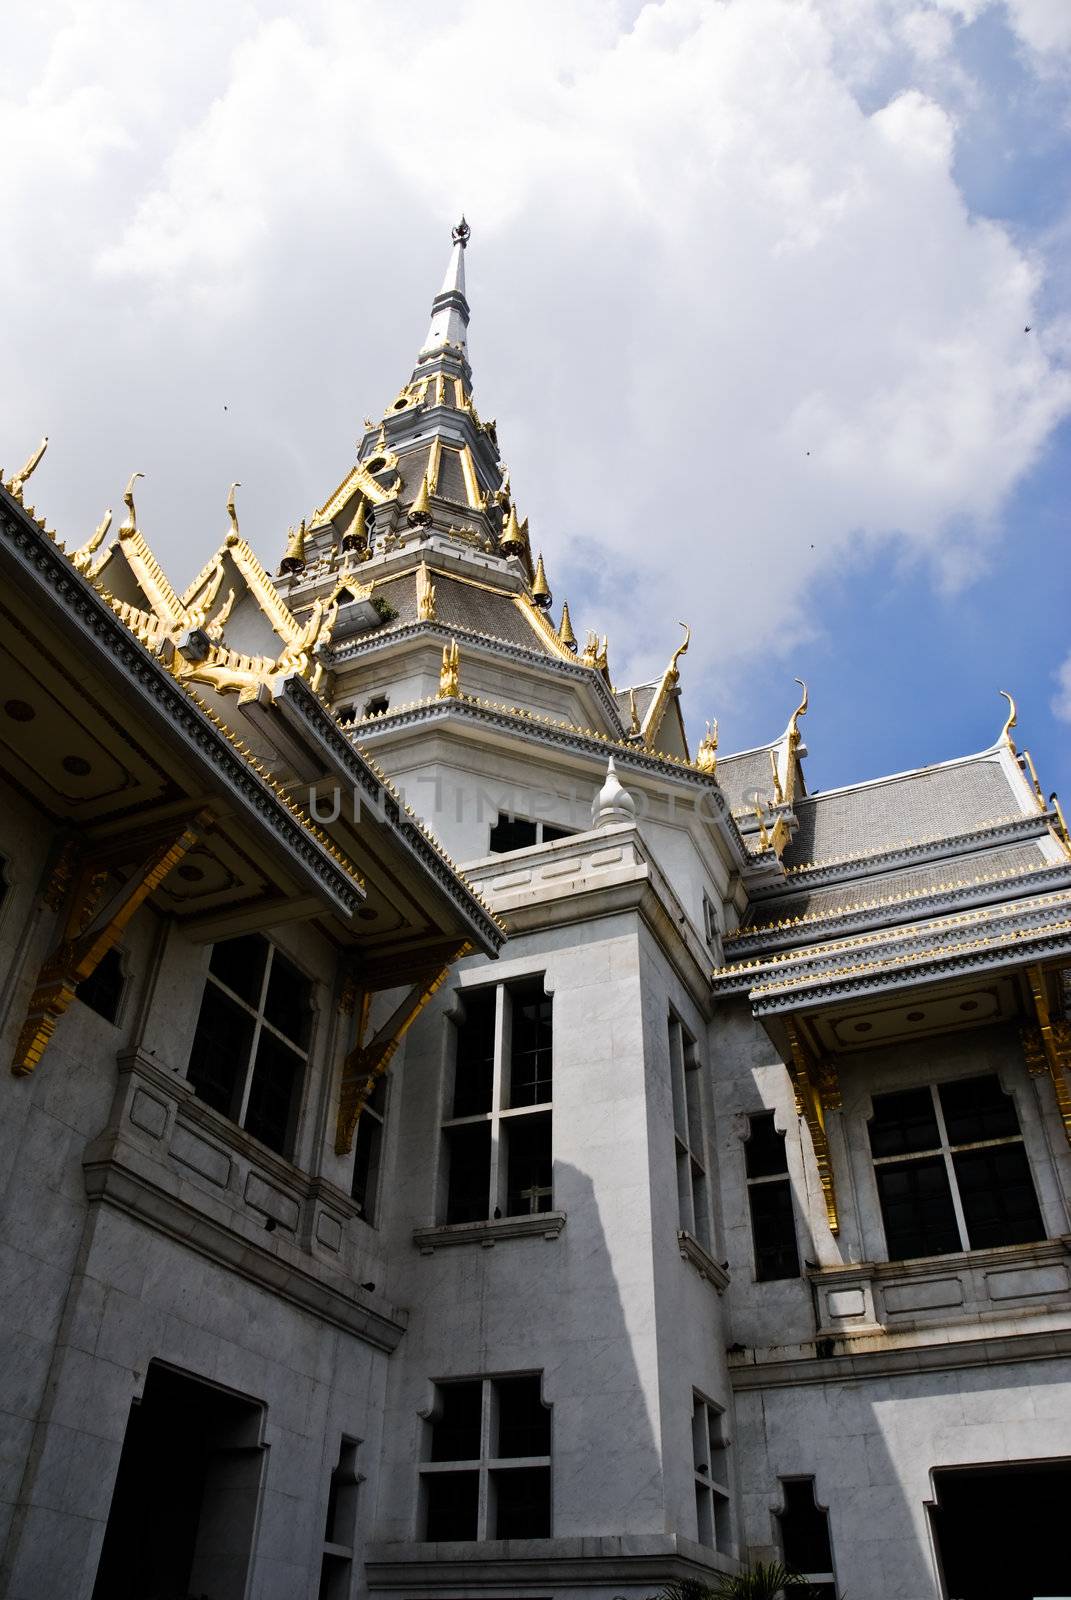 Temple sothon Worawihan Chachoengsao in Thailand by mooboyba